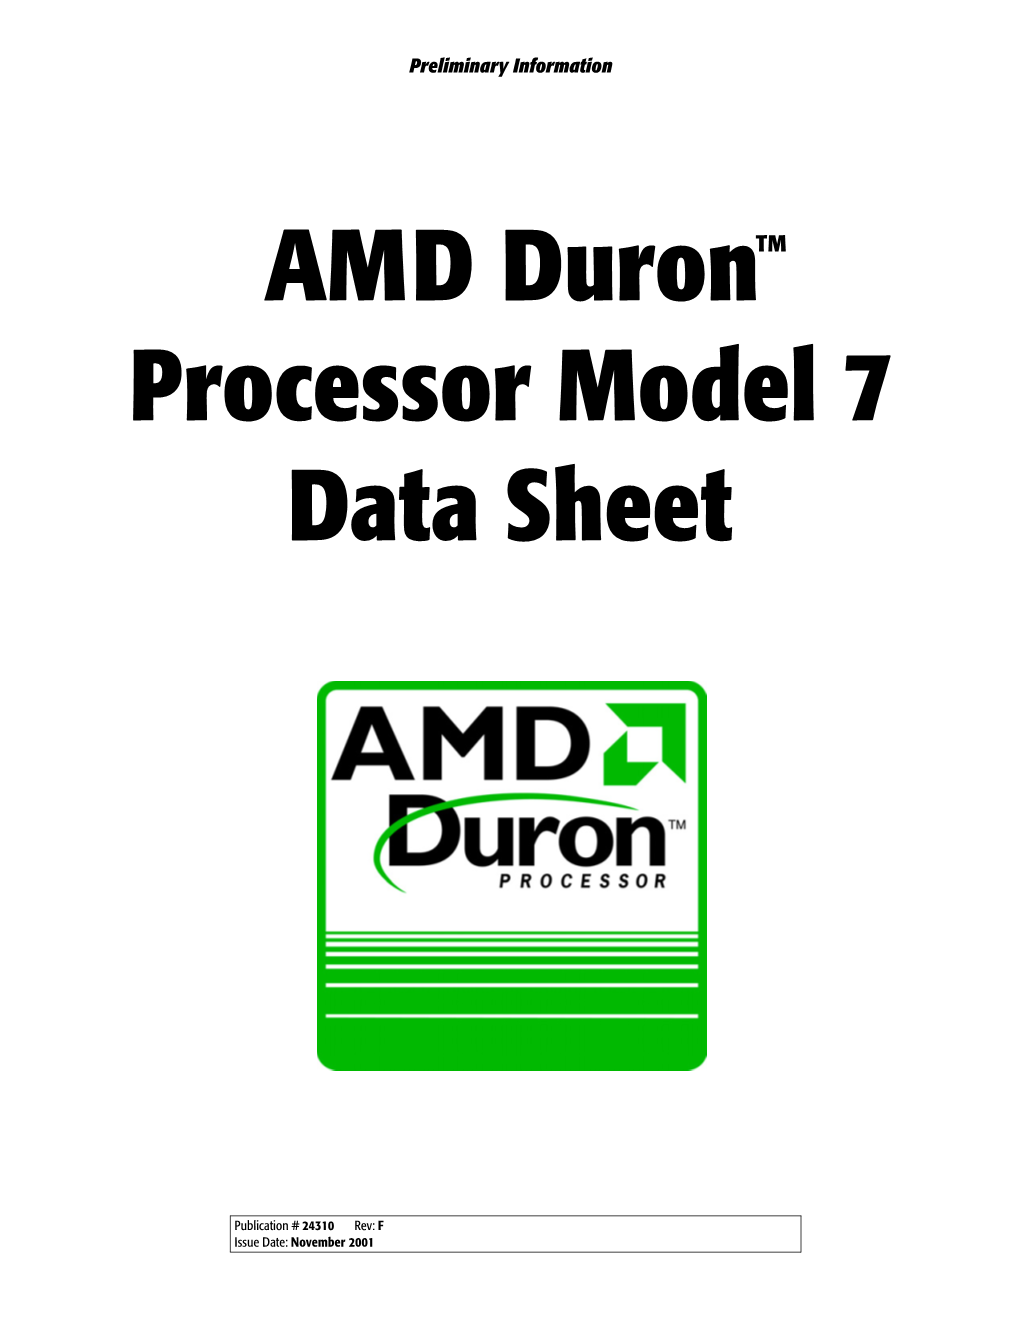 AMD Duron Processor Model 7 Data Sheet